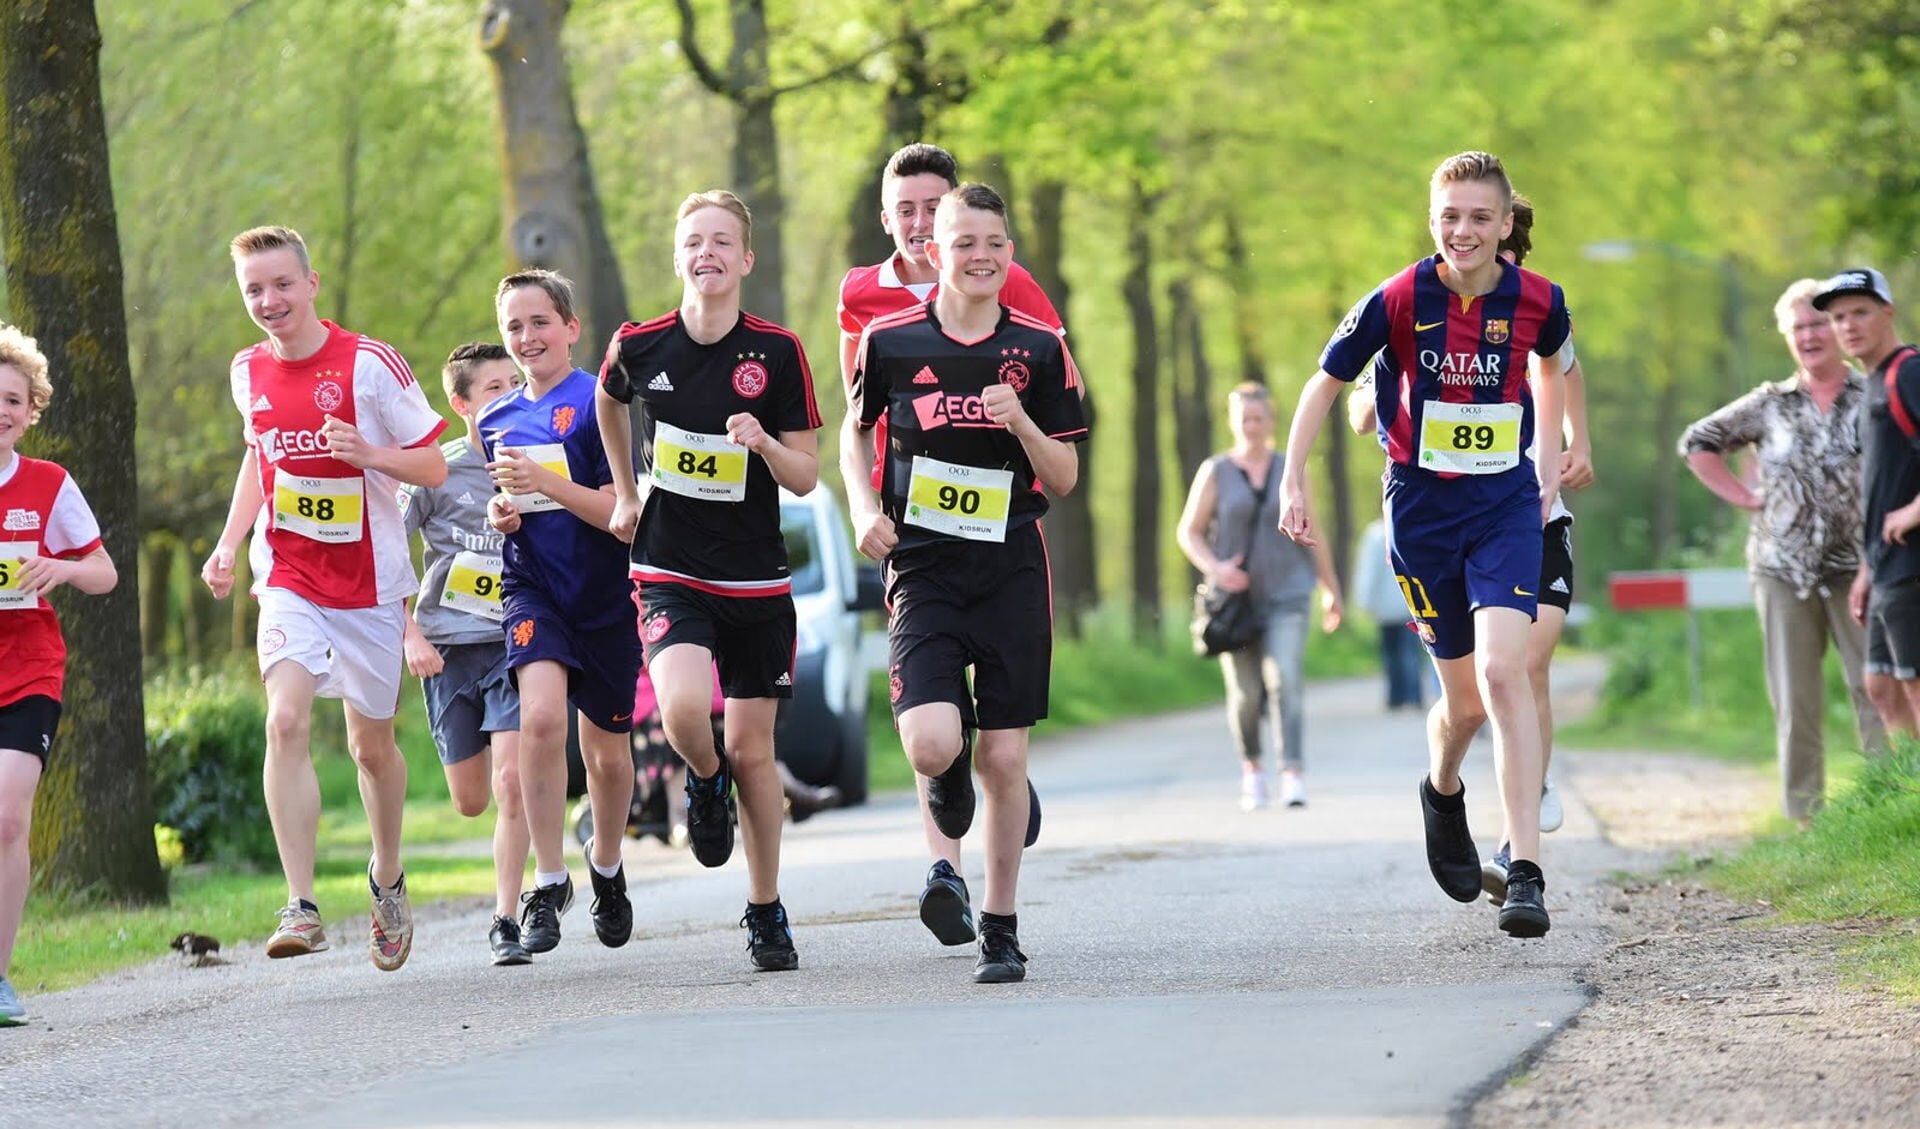  Maasland Run Classic 2017 in april van start